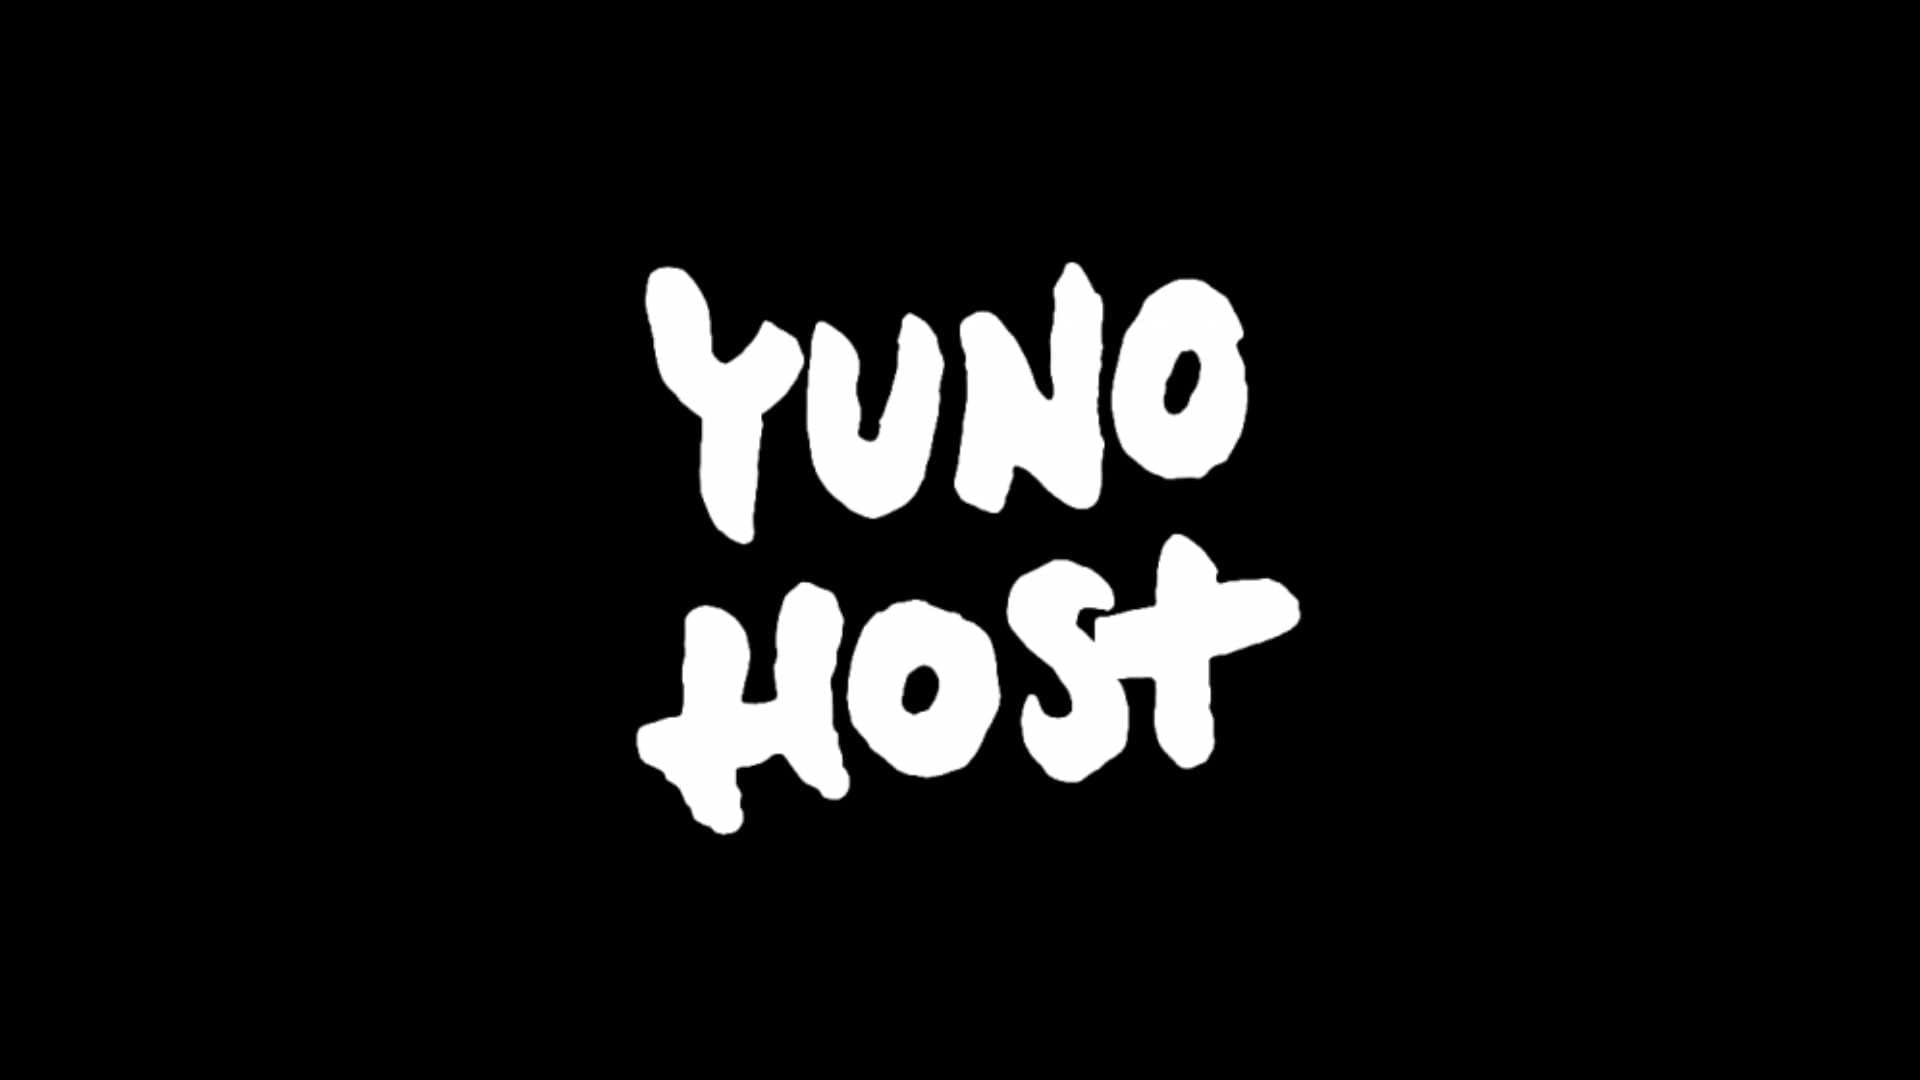 Yunohost App Updaten ohne Backup